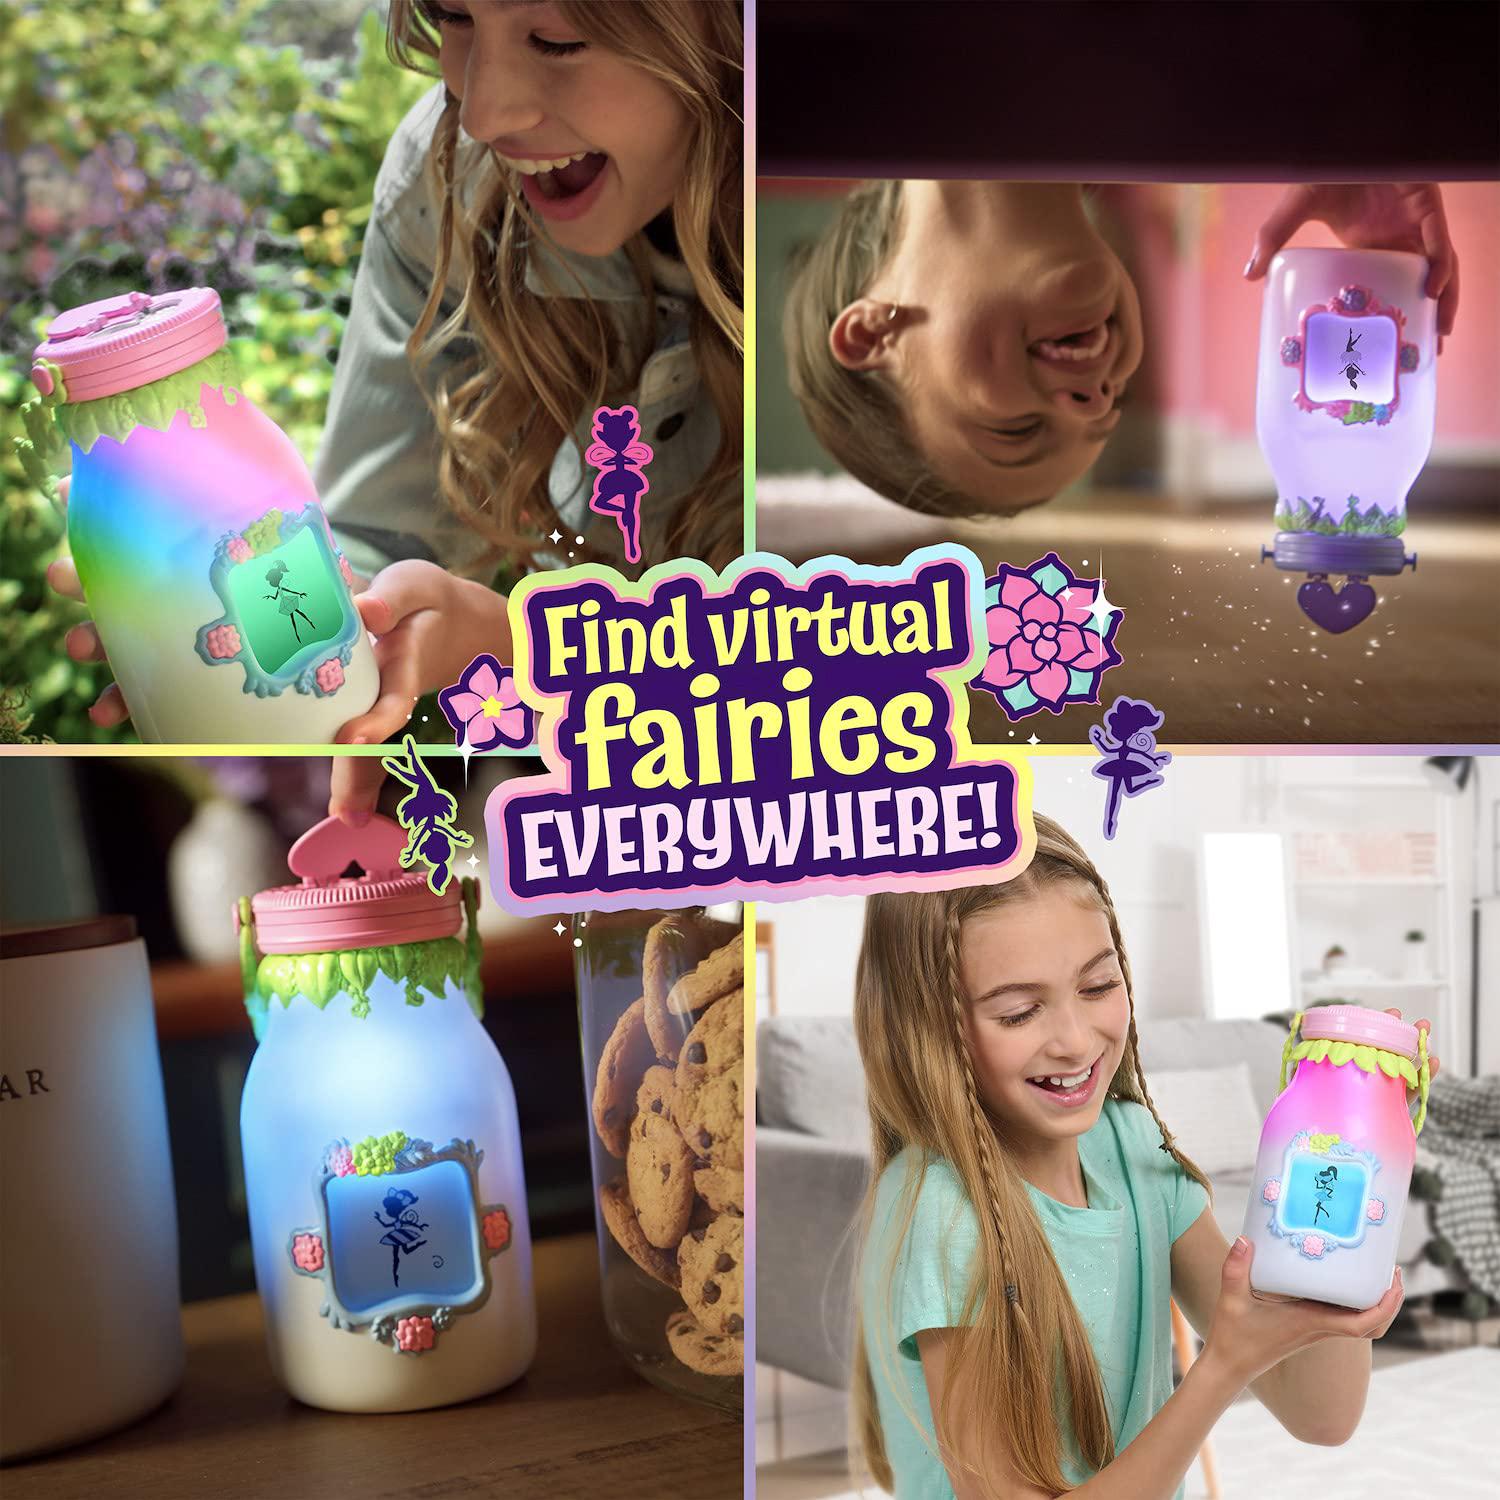 got2glow fairies got2glow fairy finder - electronic fairy jar catches 30+ virtual fairies - got to glow (pink)